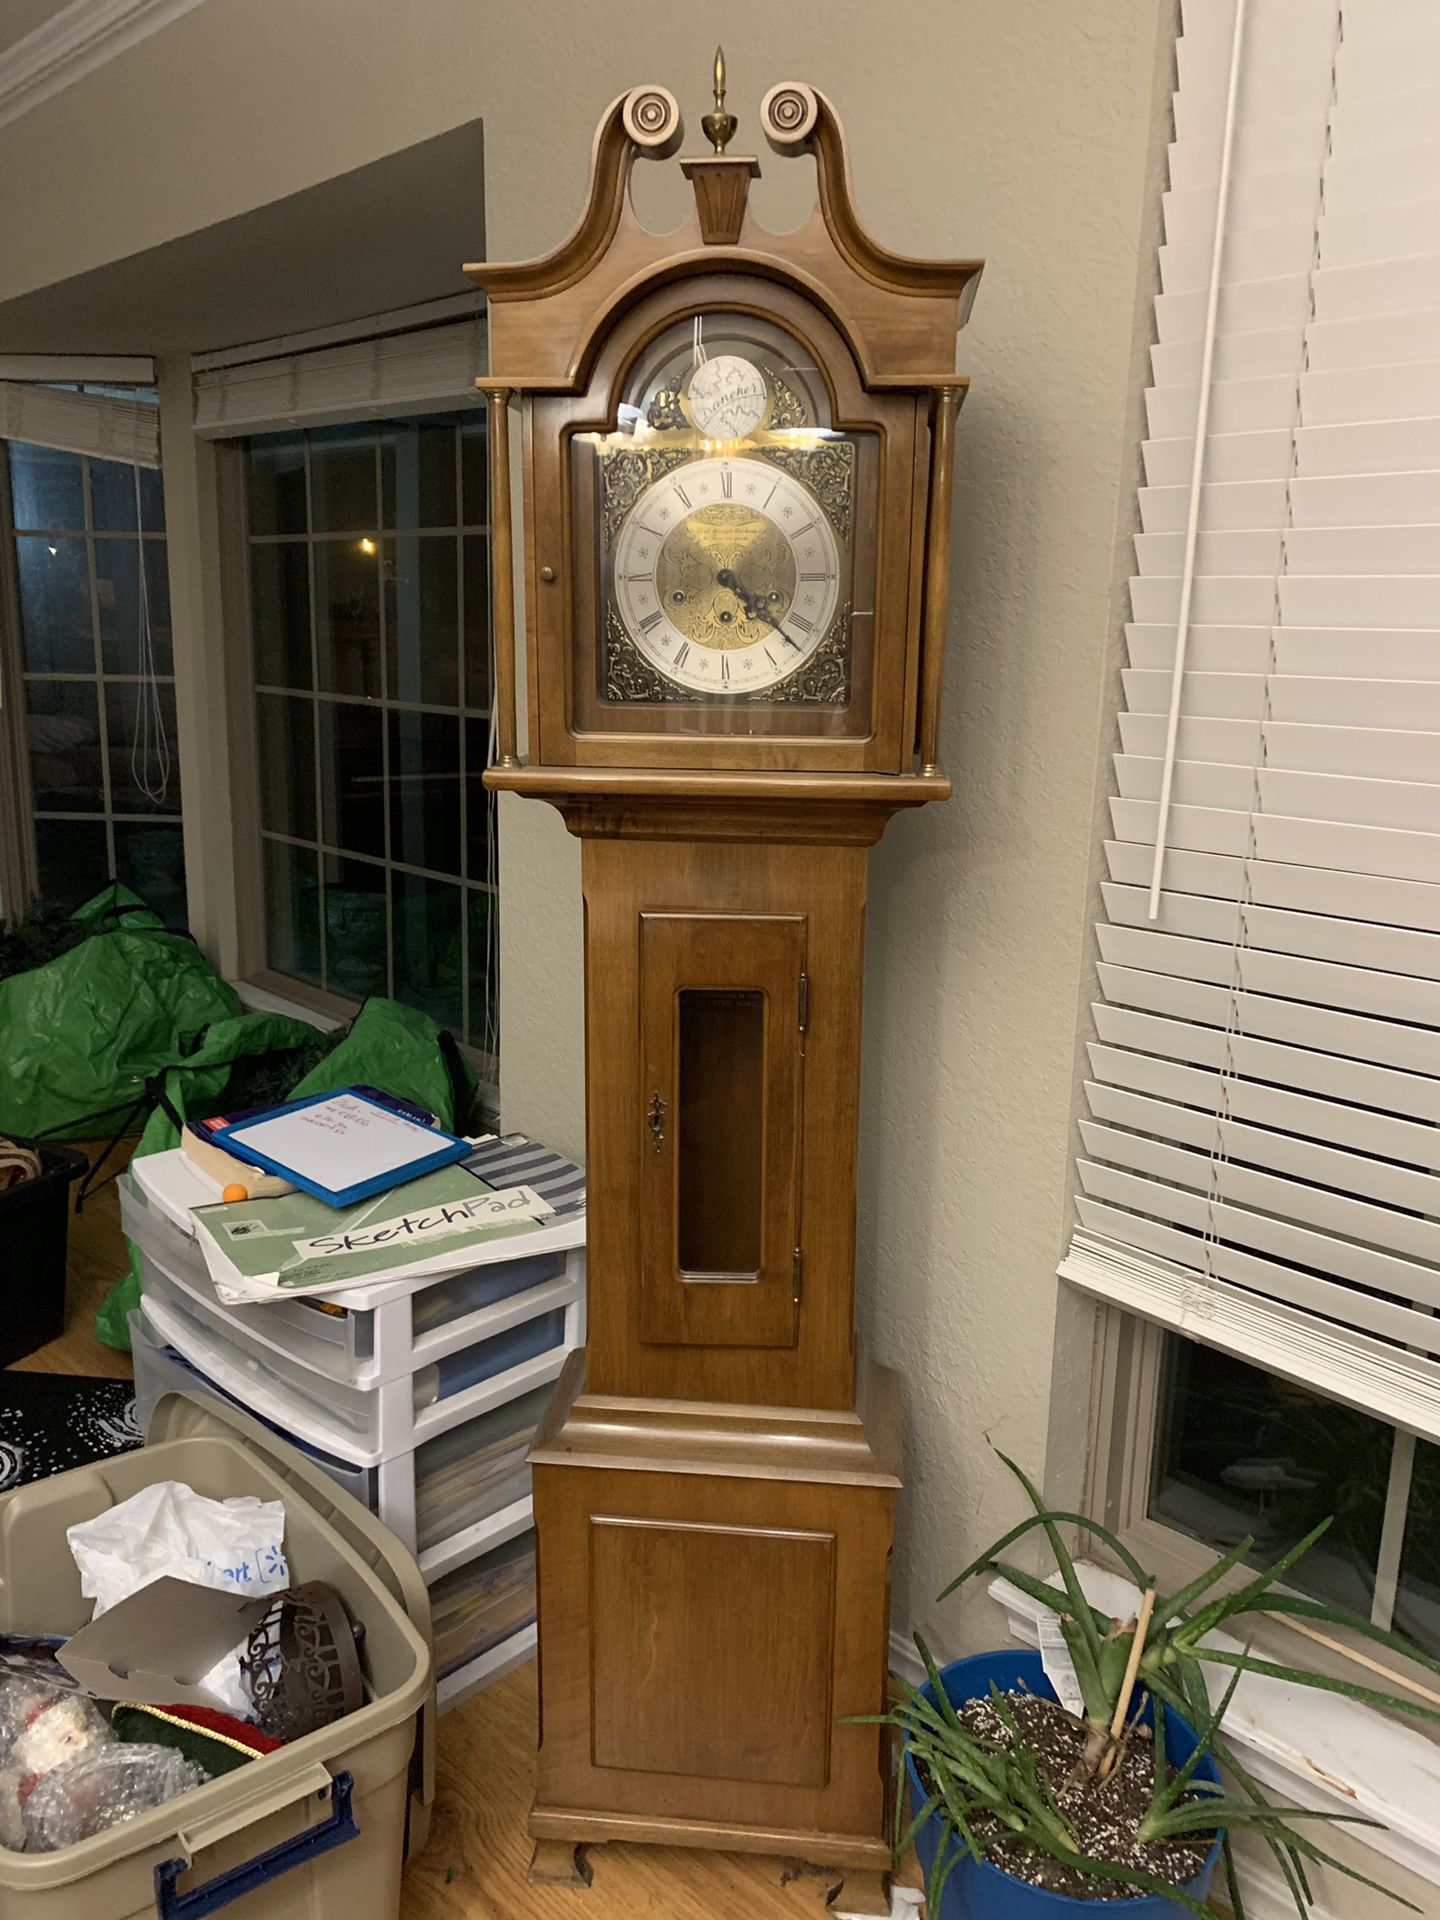 Daneker Grandfather Clock